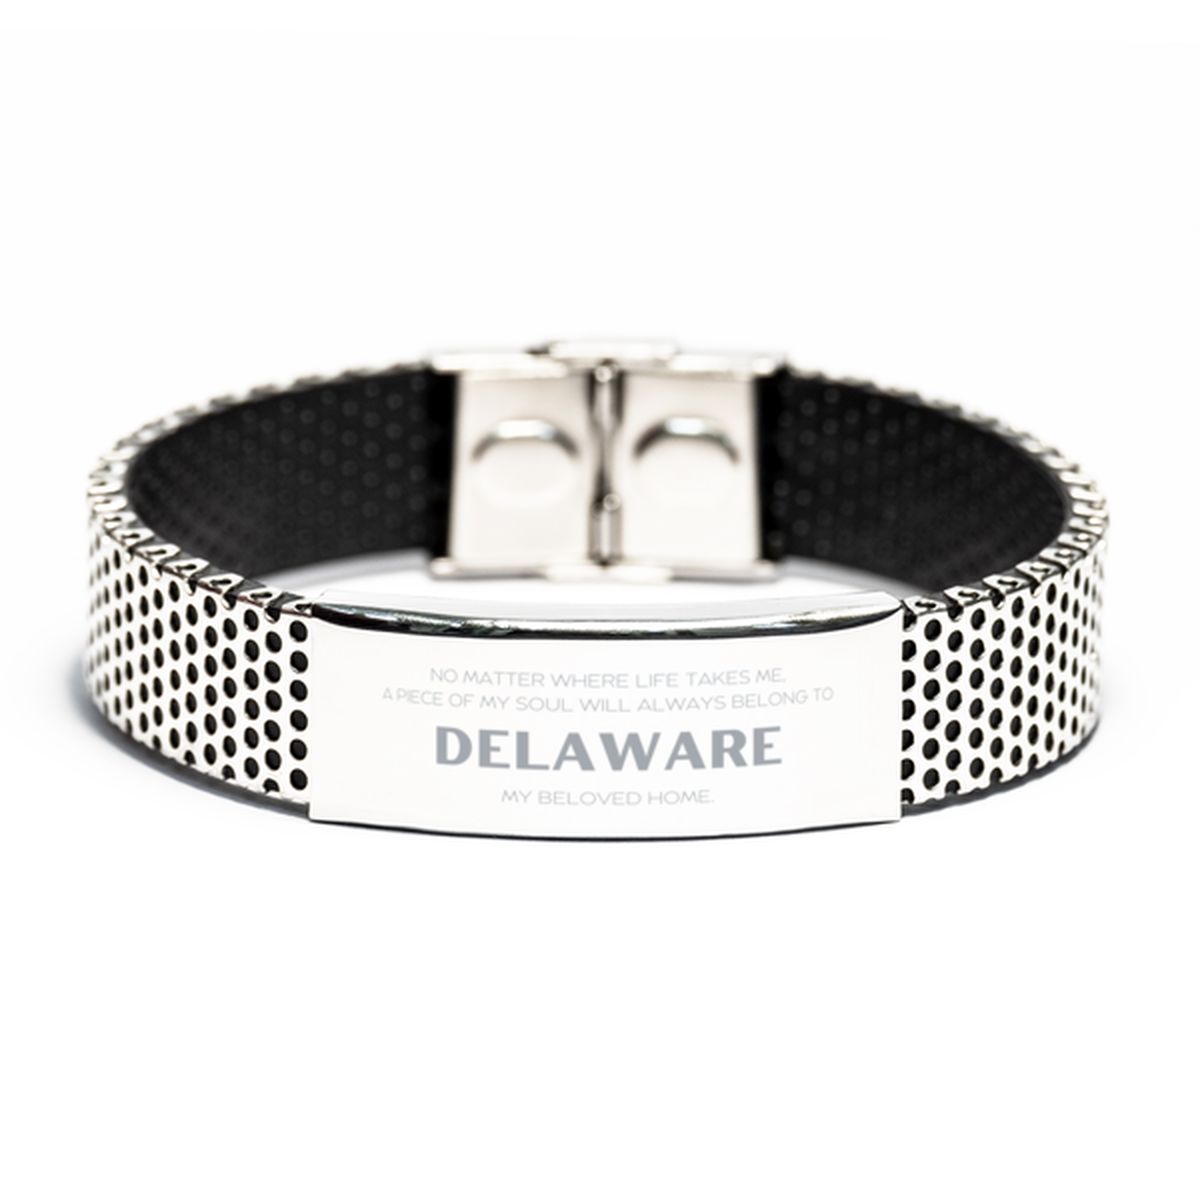 Love Delaware State Gifts, My soul will always belong to Delaware, Proud Stainless Steel Bracelet, Birthday Unique Gifts For Delaware Men, Women, Friends